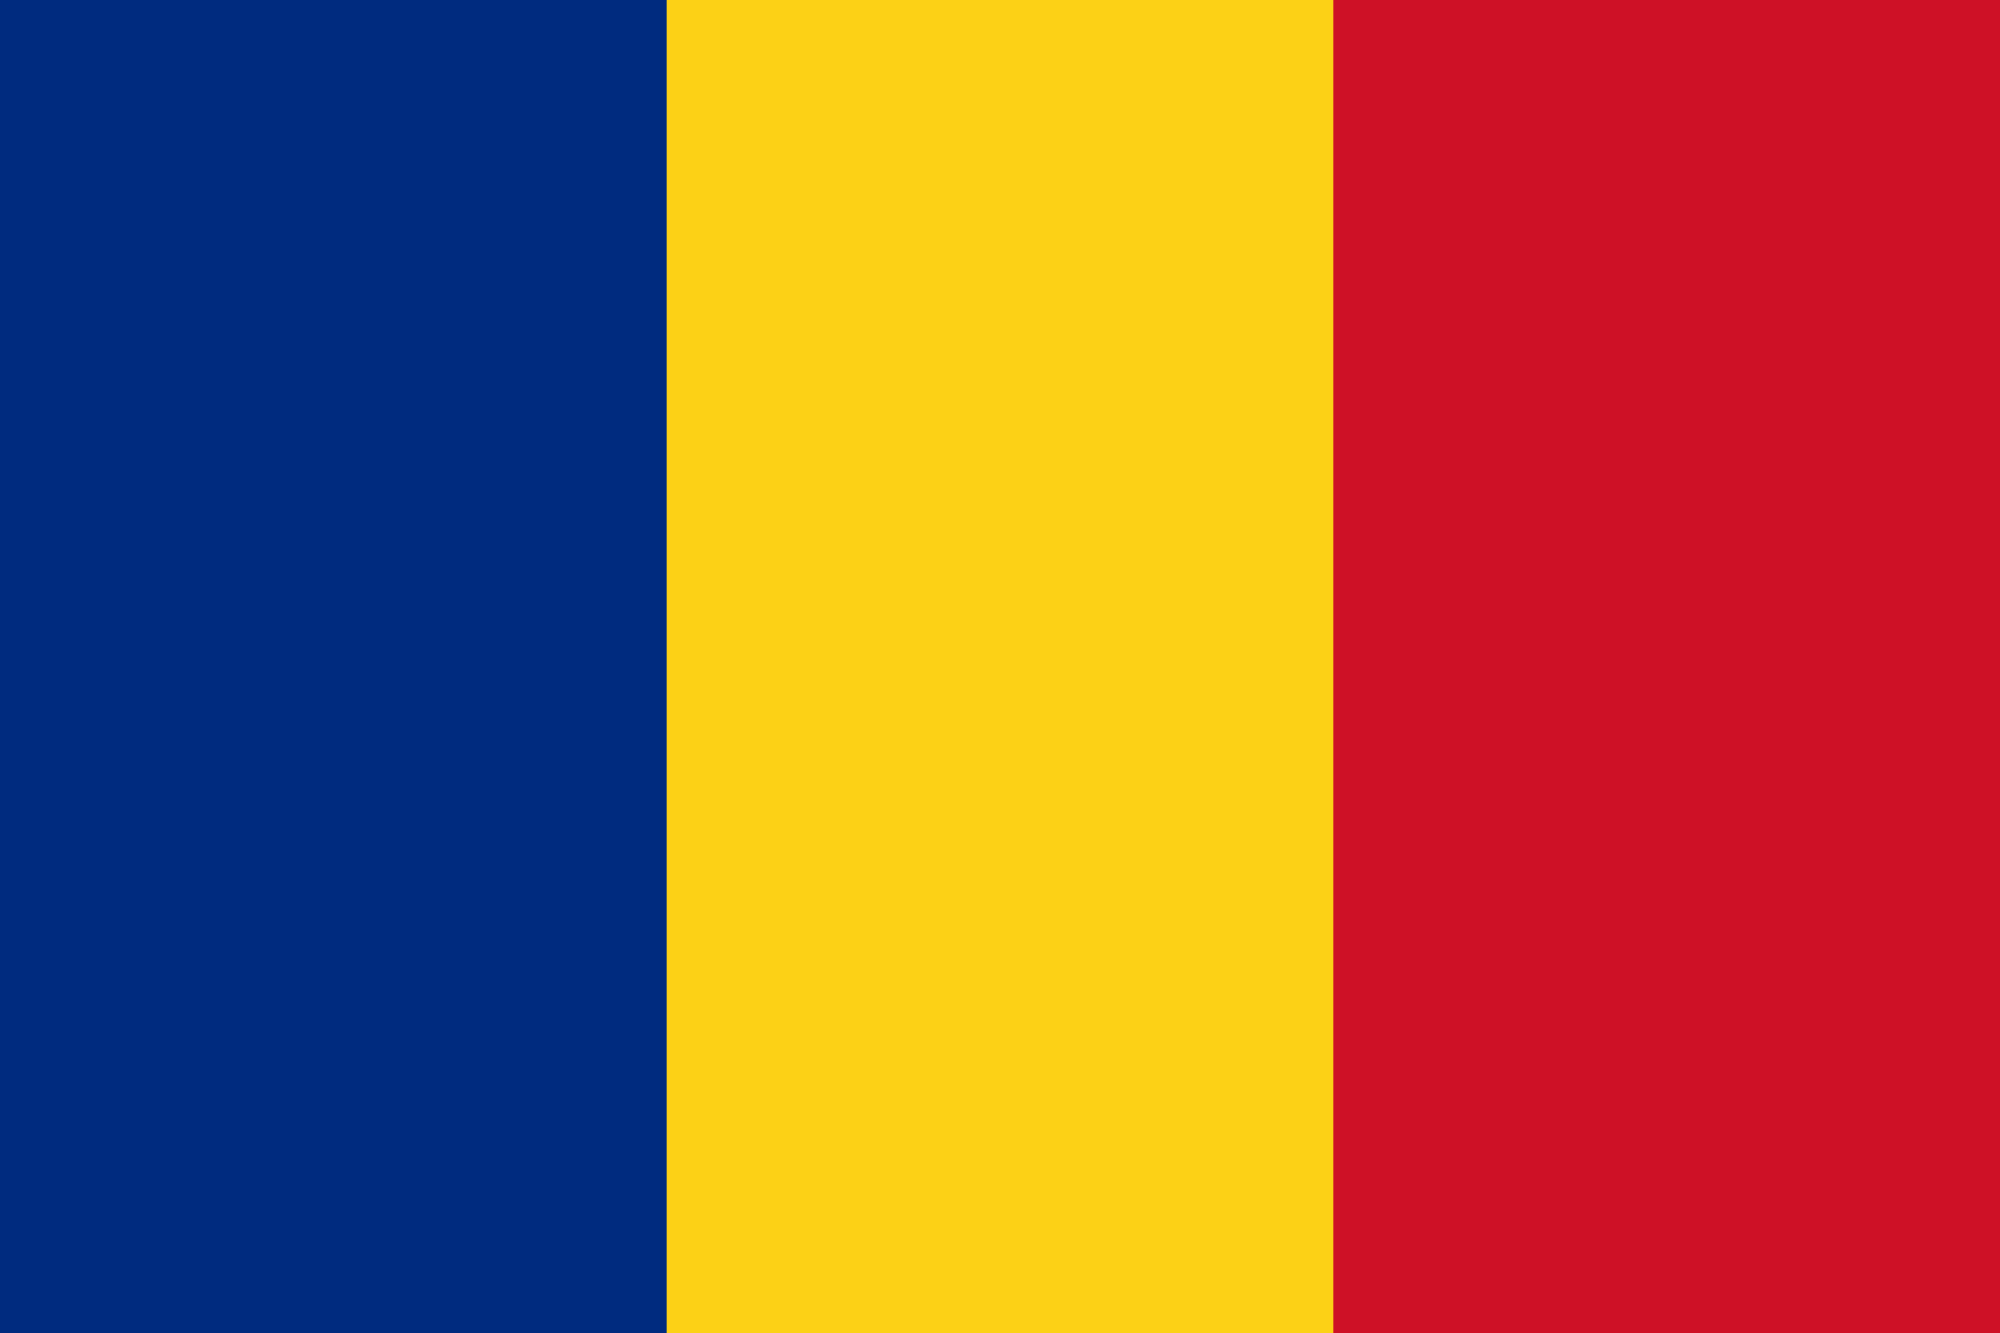 “Romania